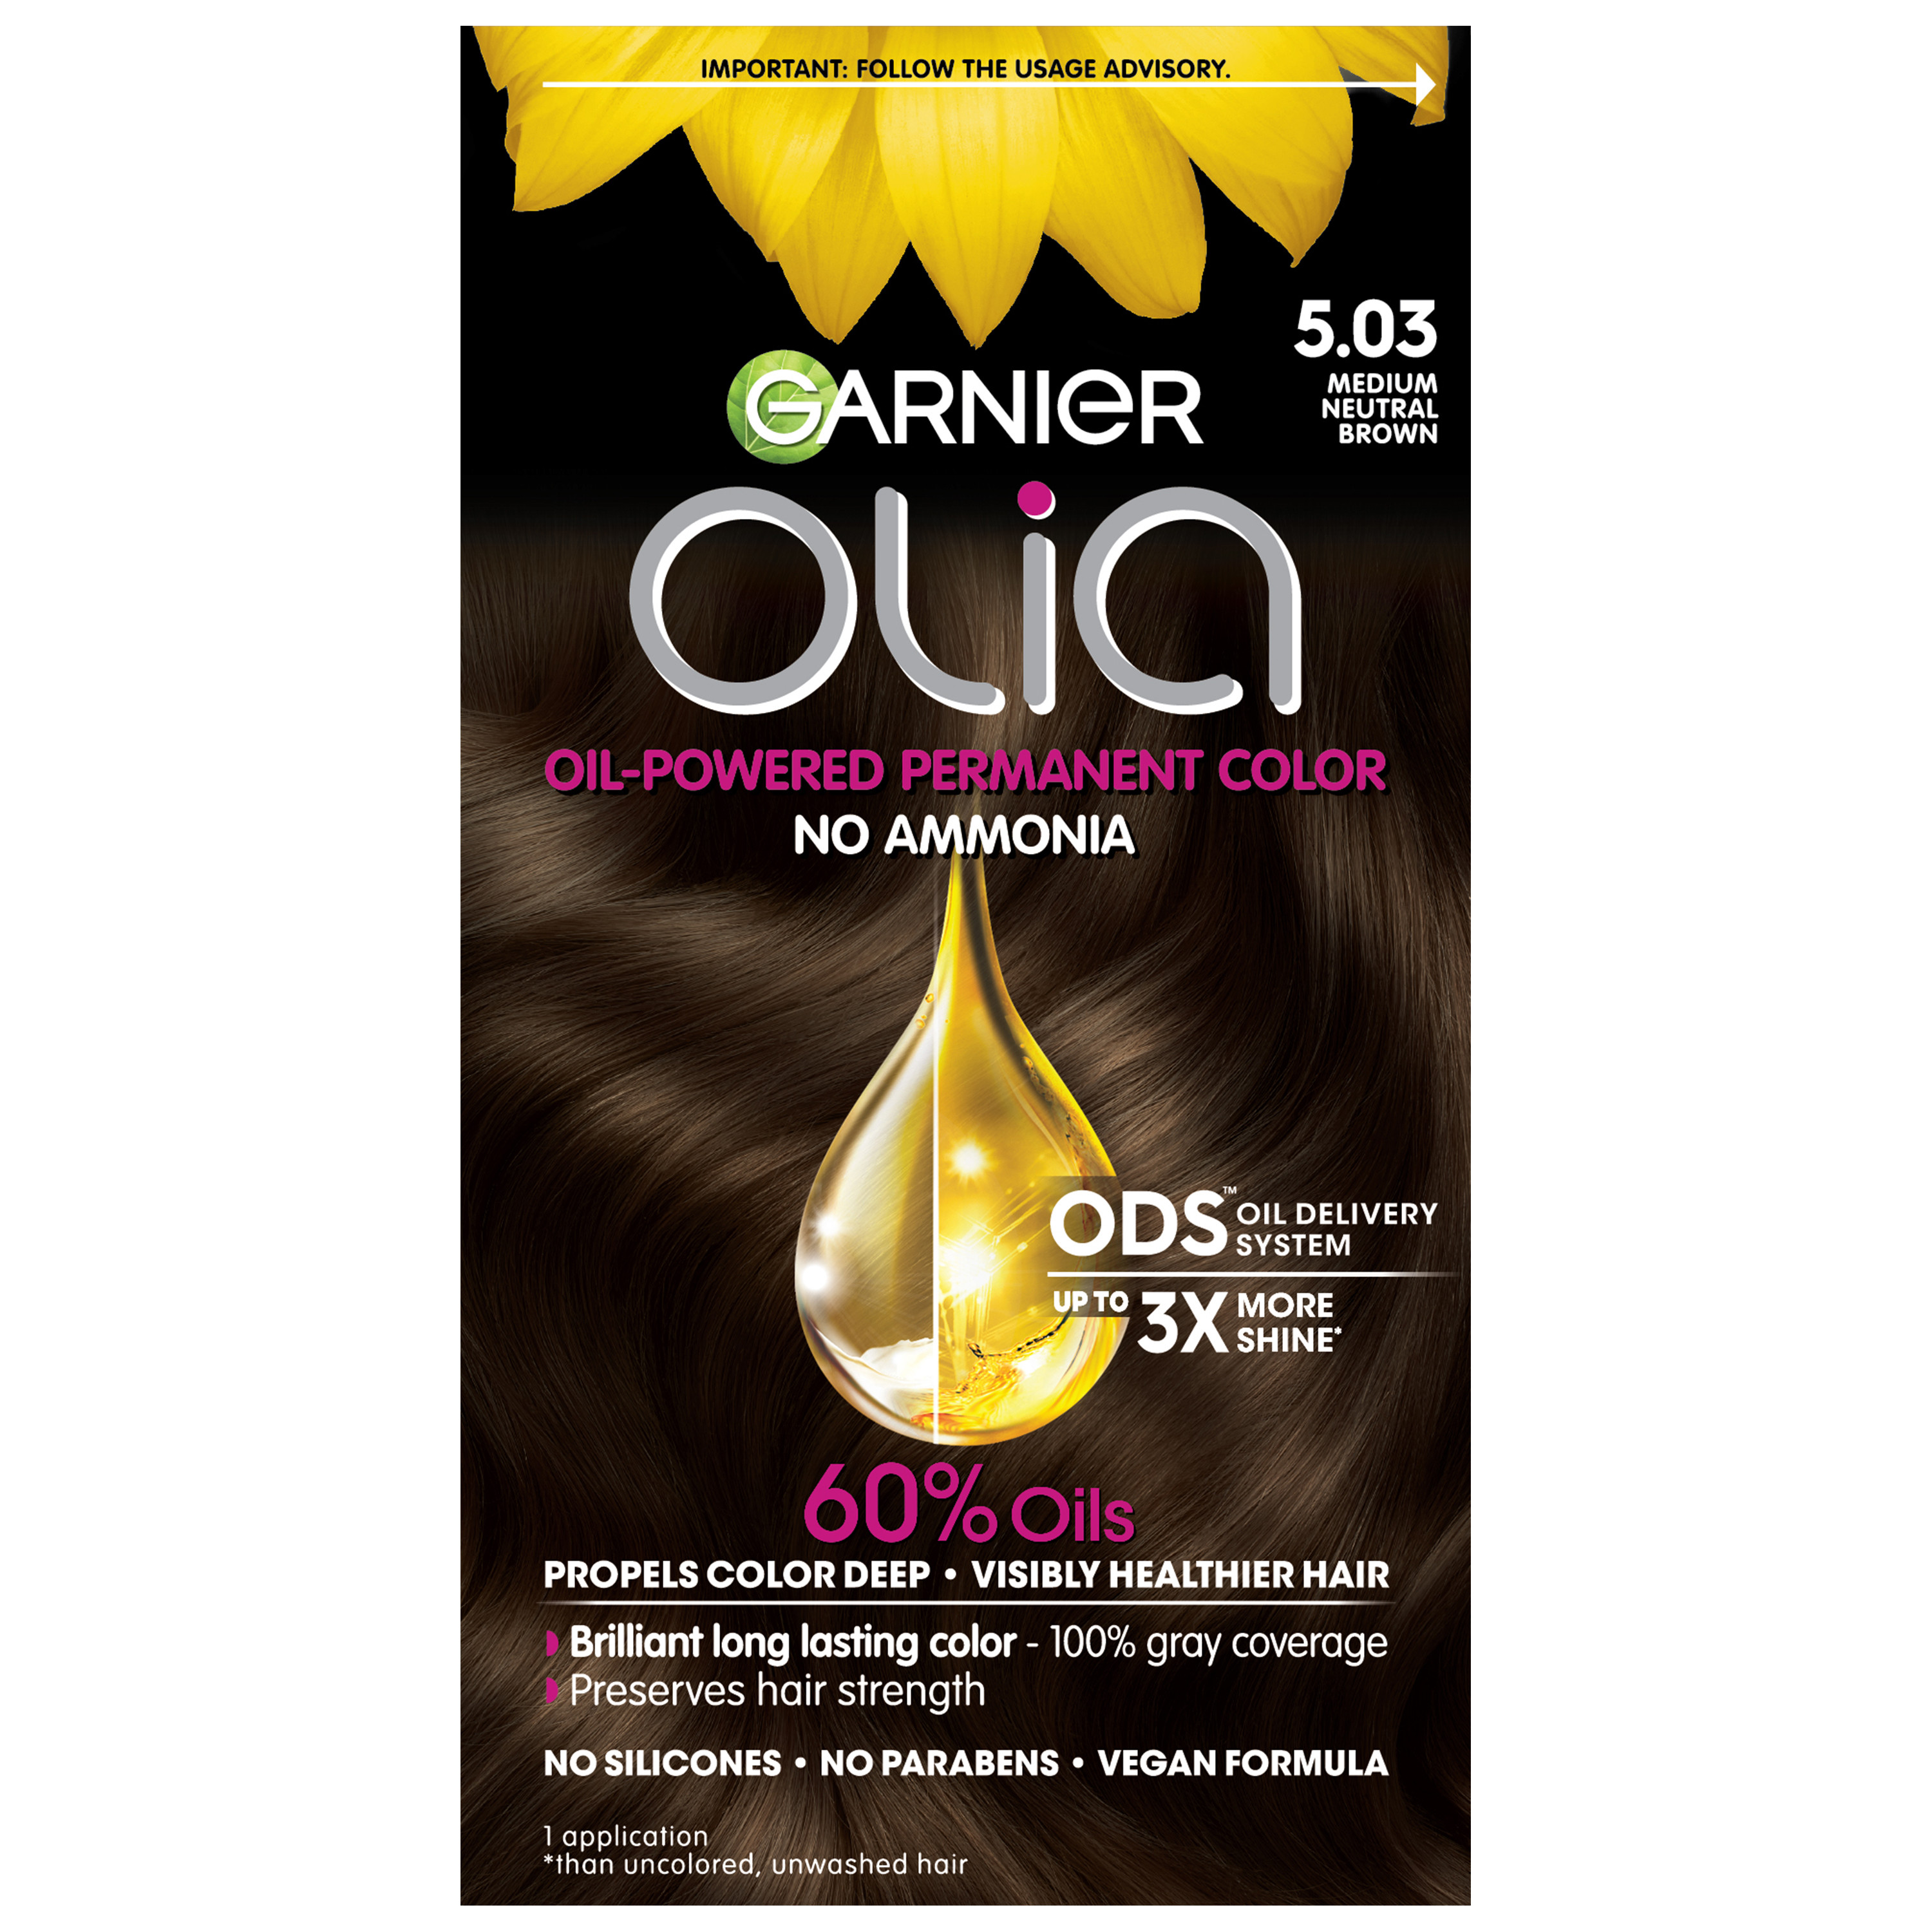 Garnier Olia Oil Powered Permanent Hair Color, 5.03 Medium Neutral Brown - image 1 of 9